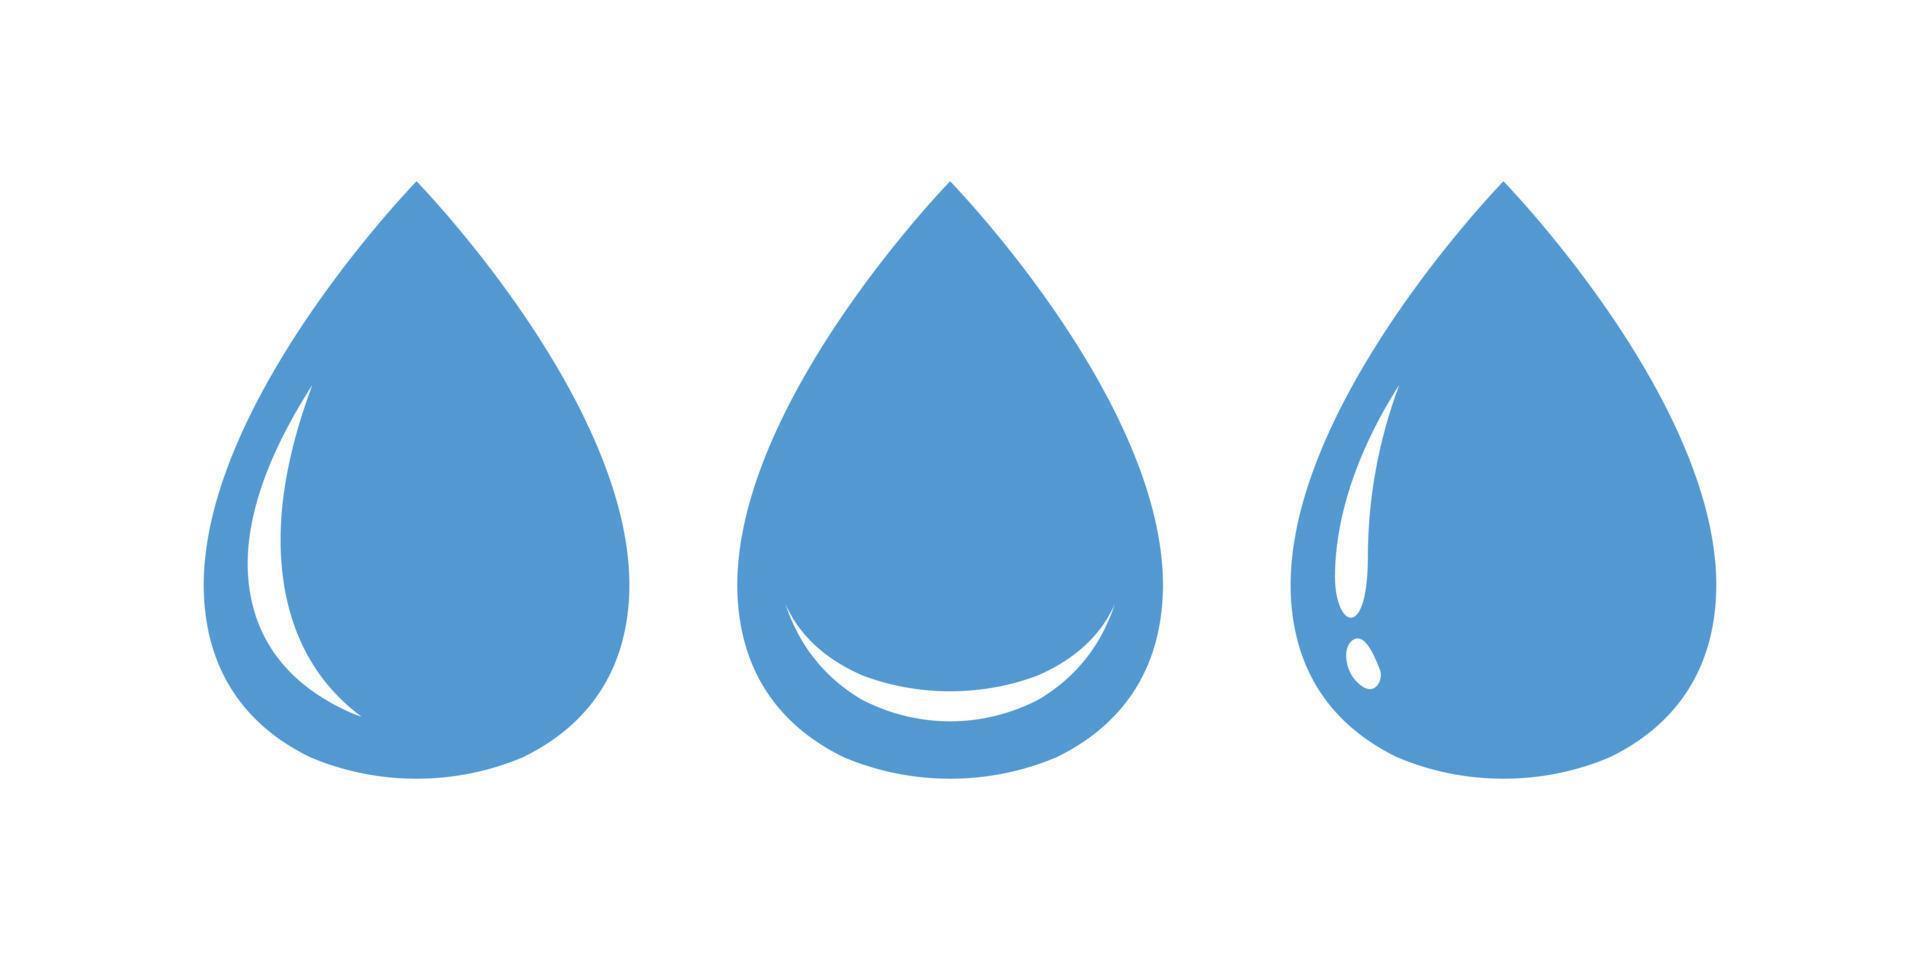 Water drops illustrations vector